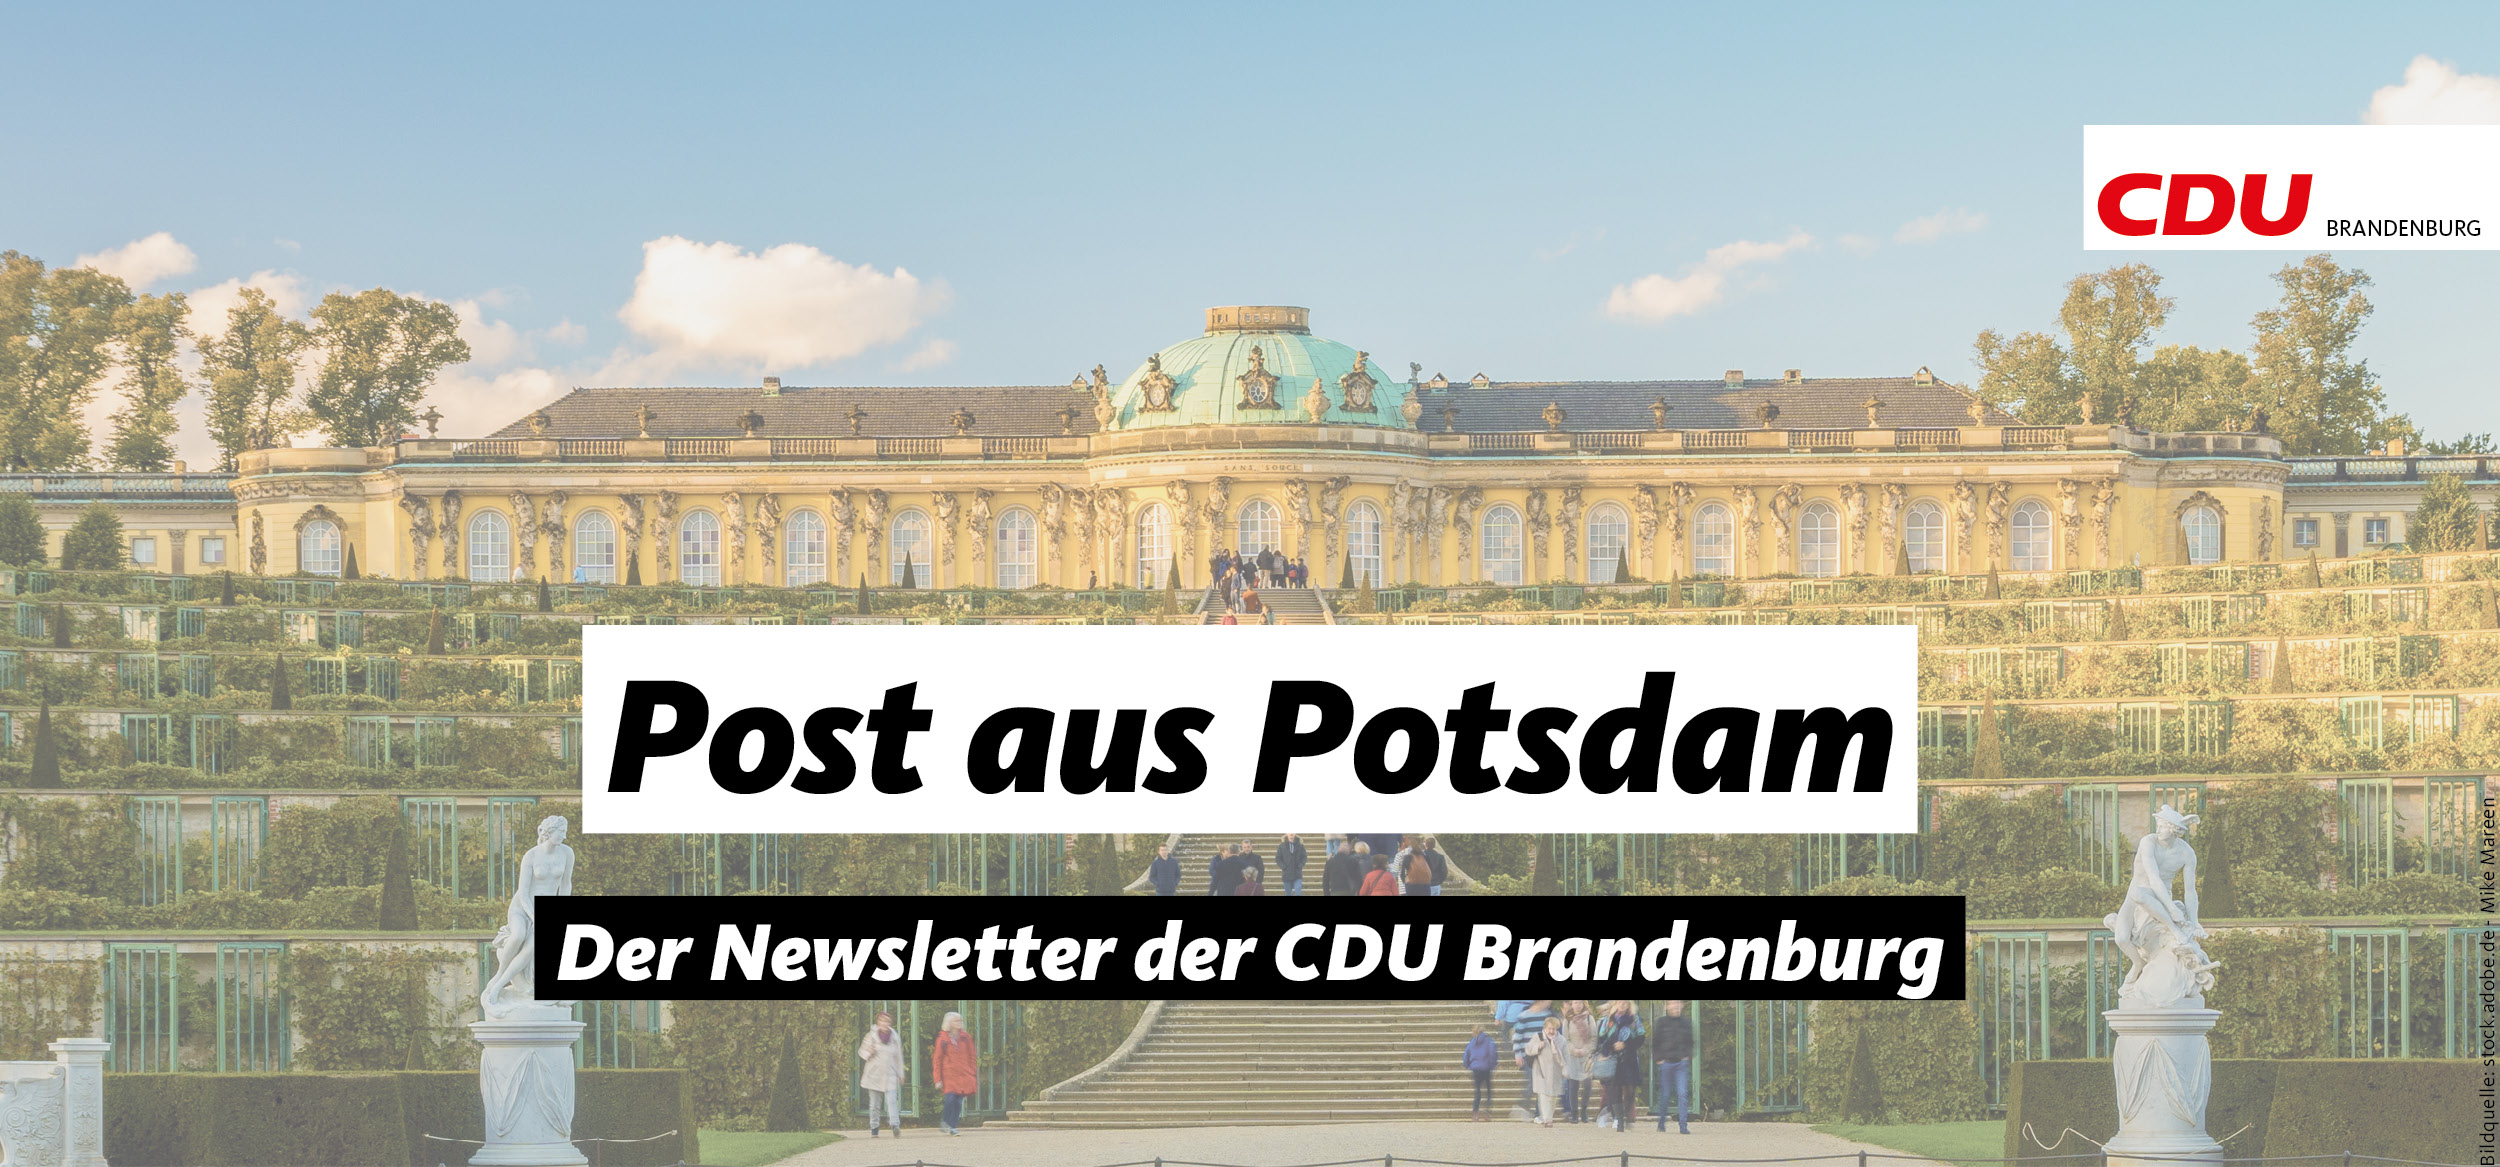 Post aus Potsdam